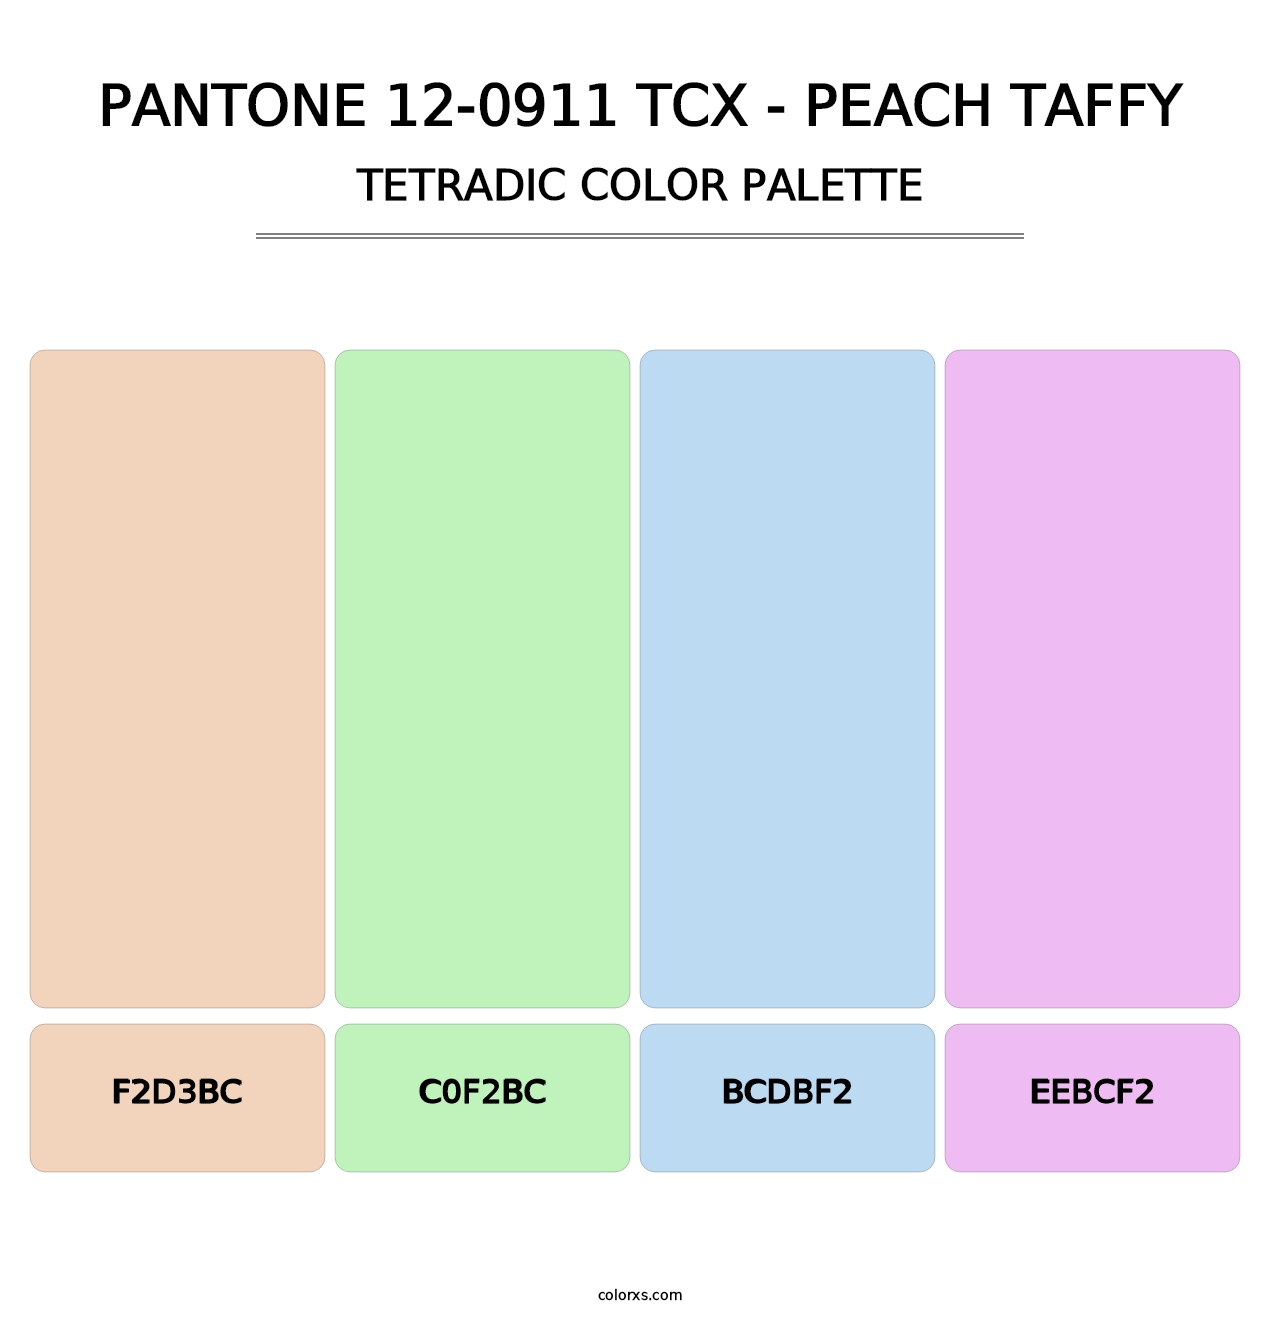 PANTONE 12-0911 TCX - Peach Taffy - Tetradic Color Palette